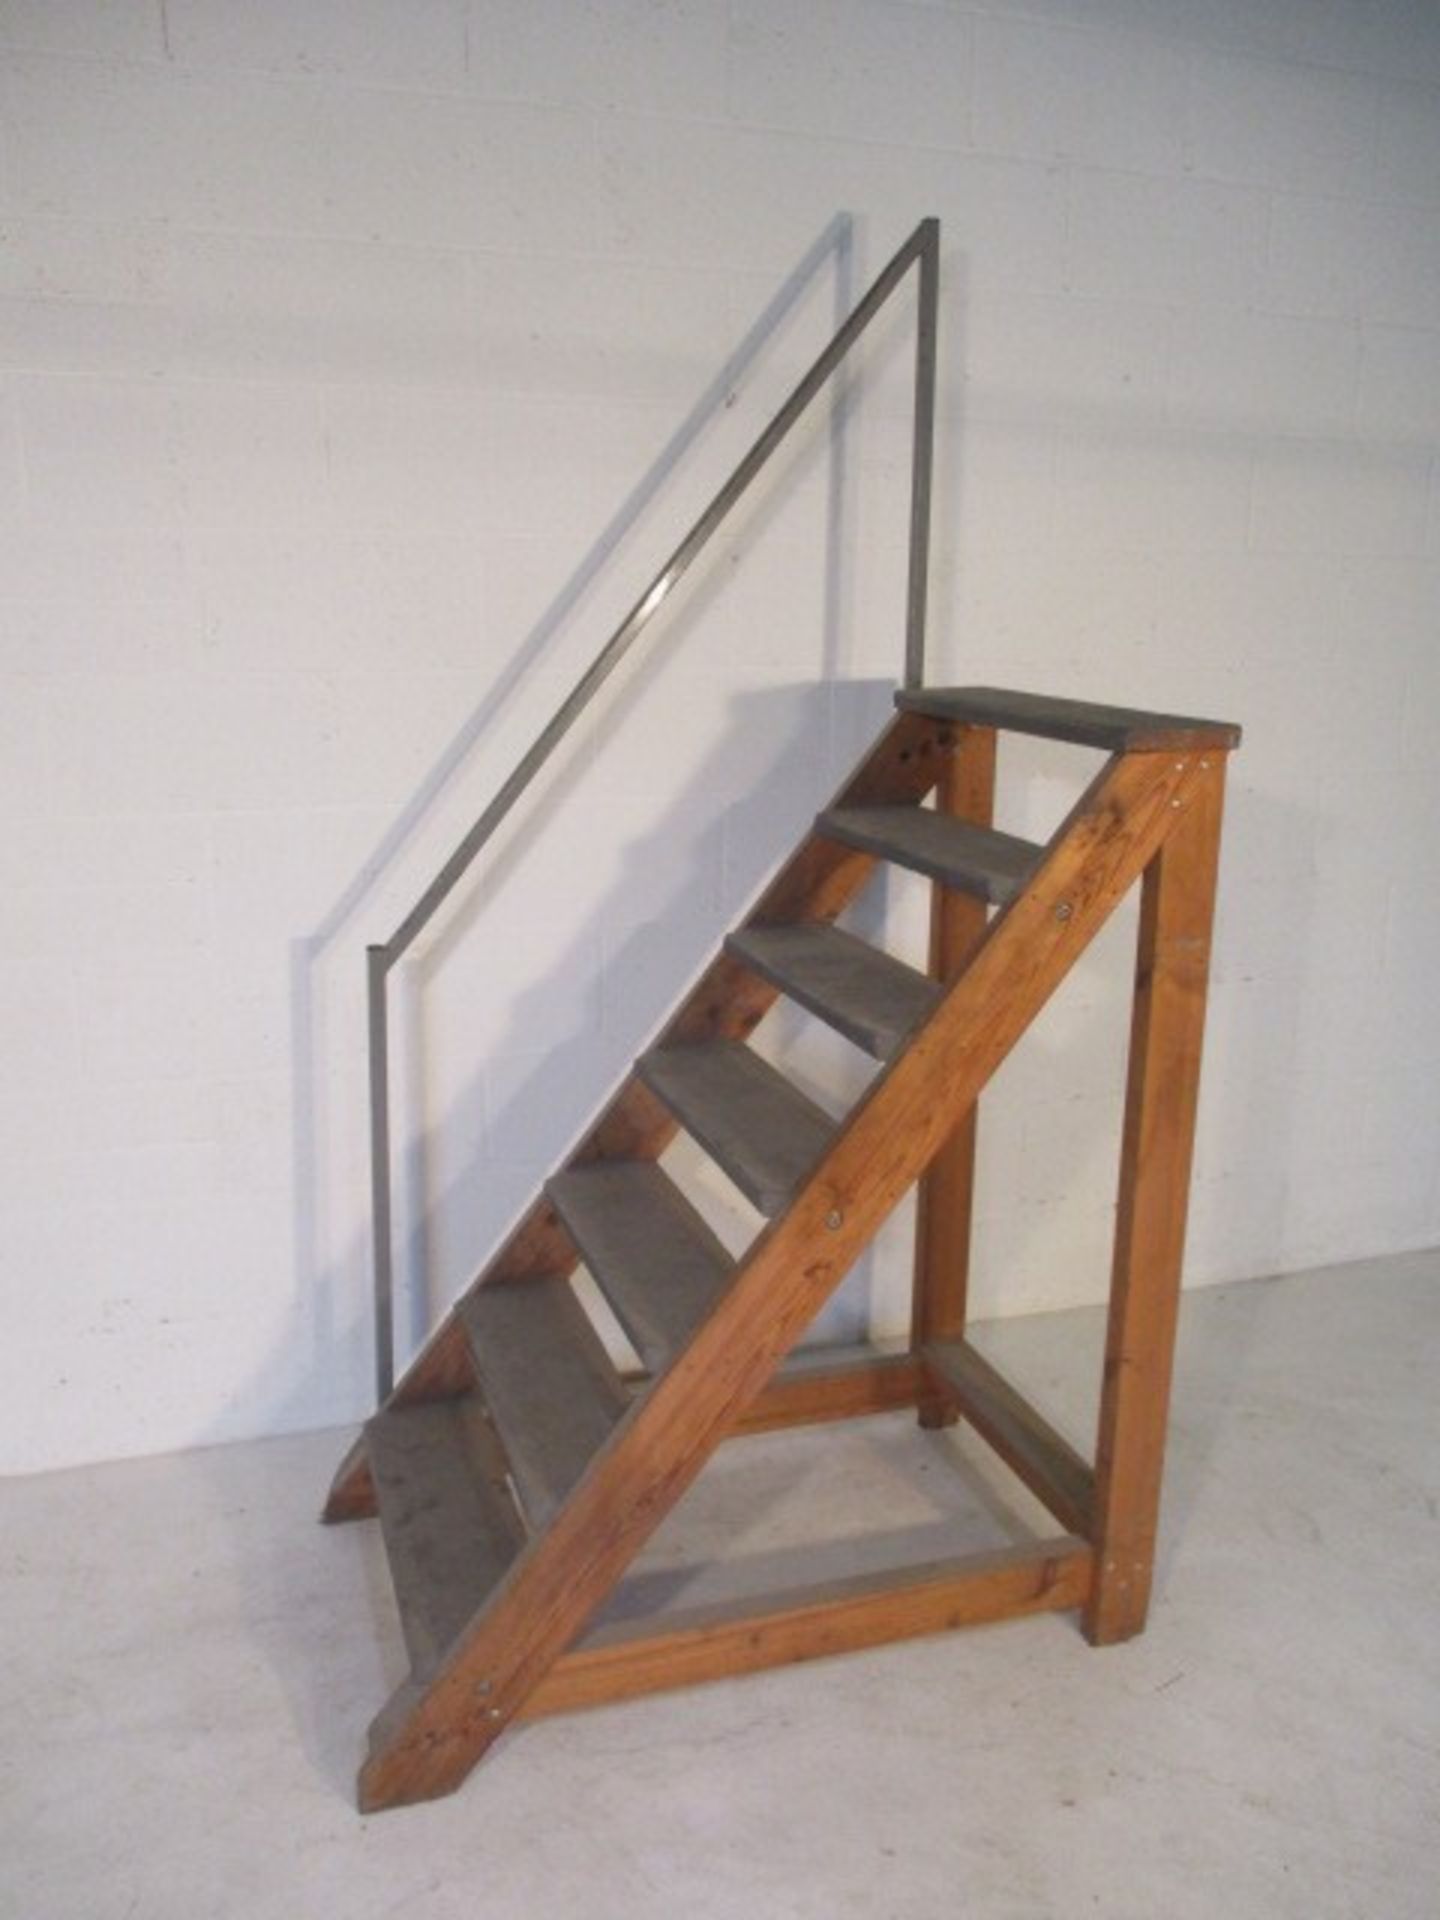 A set of handmade steps, 211 cm overall height